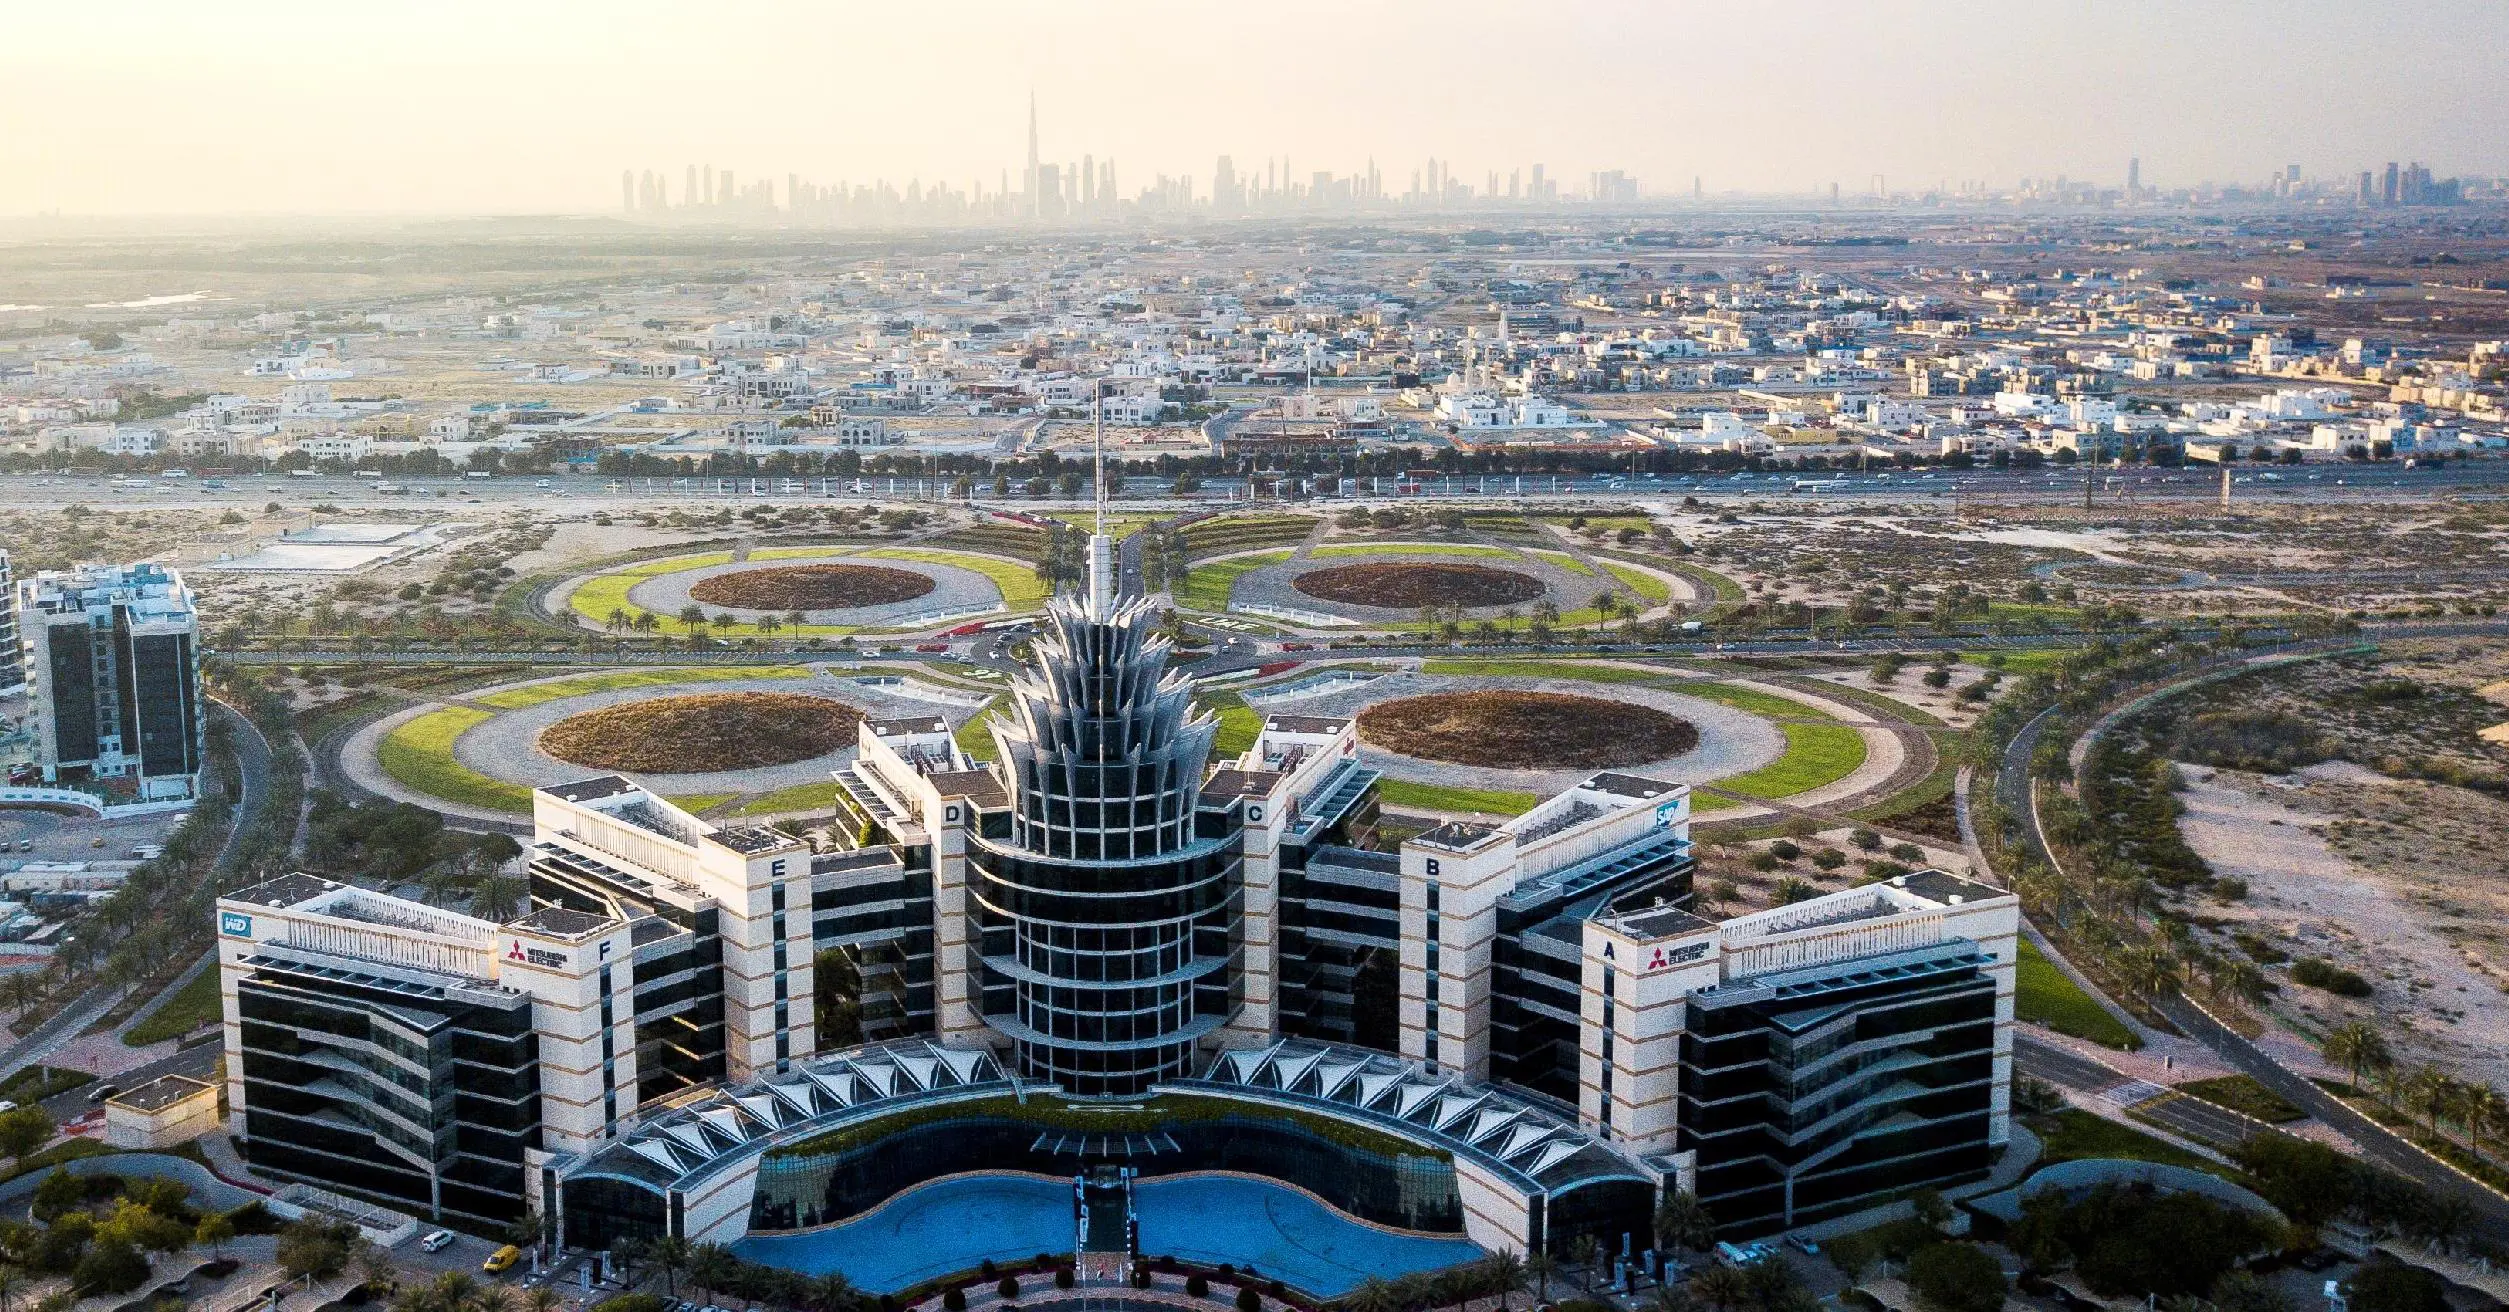 Silicon Oasis: A High-Tech Hub in the Heart of Dubai